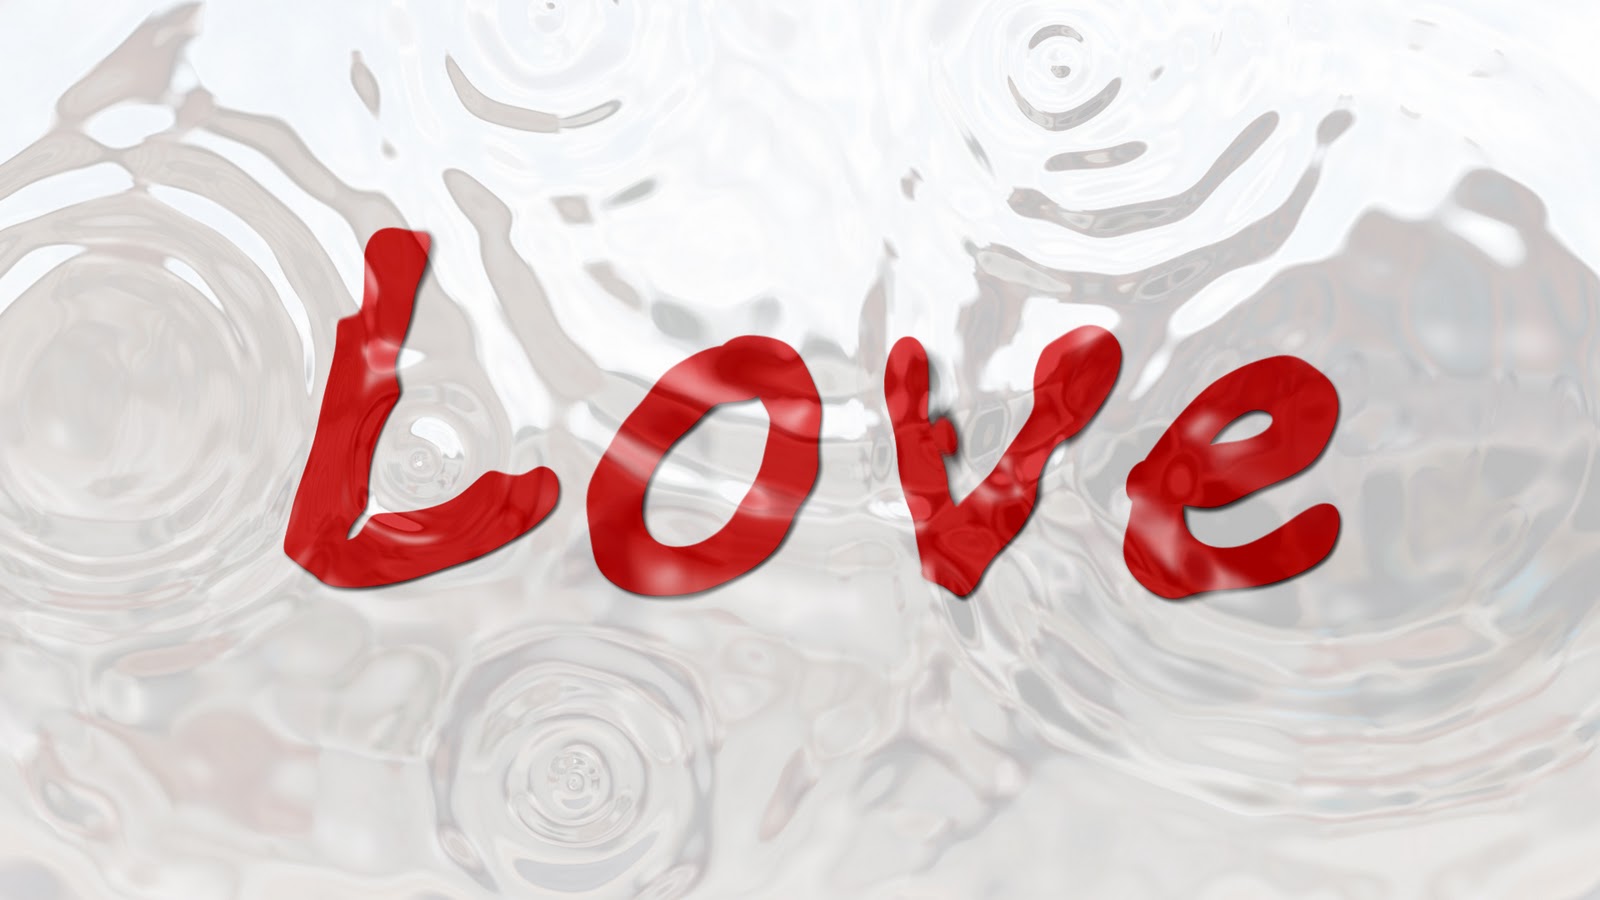 https://blogger.googleusercontent.com/img/b/R29vZ2xl/AVvXsEhHm7KdJ1BxaOjxtLK5TwagpjSe936va1U0zfPiiYjRw2QowBGGWmQNYL0VhlPPTKw66cOyBlLW1N2PiZJXy8HpMlRIUbHEG_kpDYFs0hkp3hJO9fpVDb2R34sBhHEU2o3nRZkvtJluxJlq/s1600/desktop-love-wallpapers+hd-love-wallpaper-red-text-love.jpg